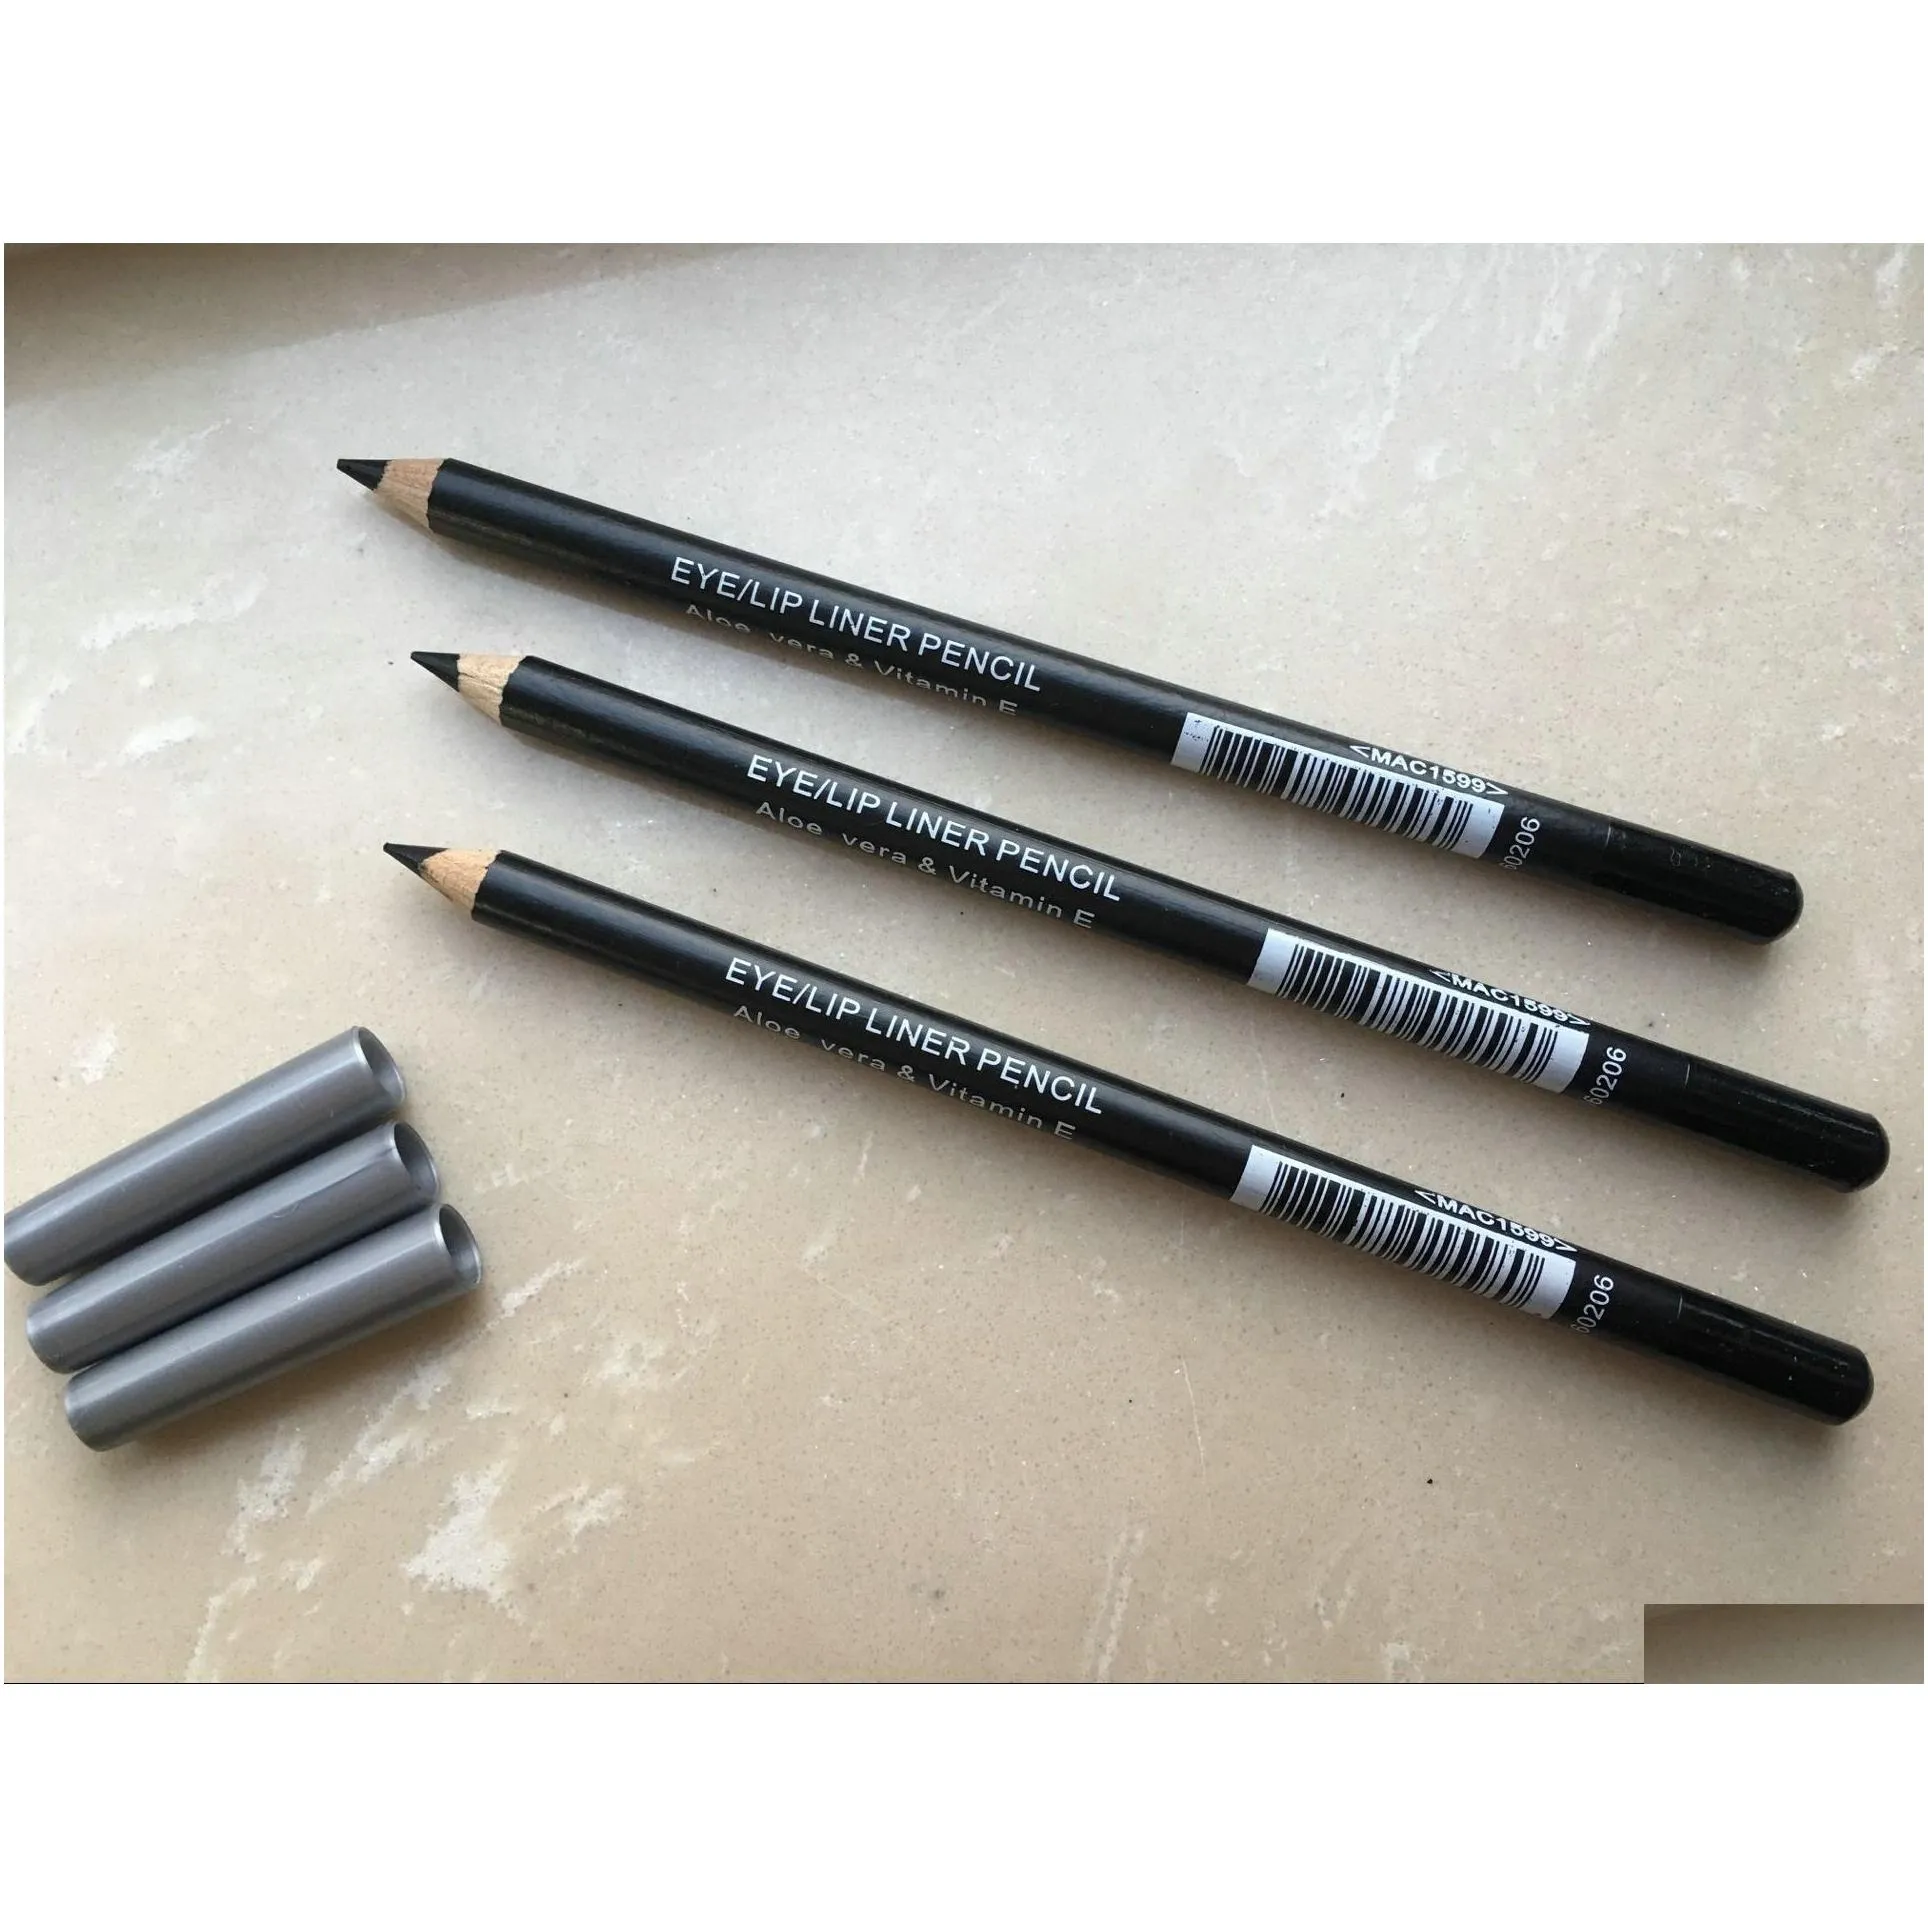  est eyeliner pencil black and brown colors 12pcs